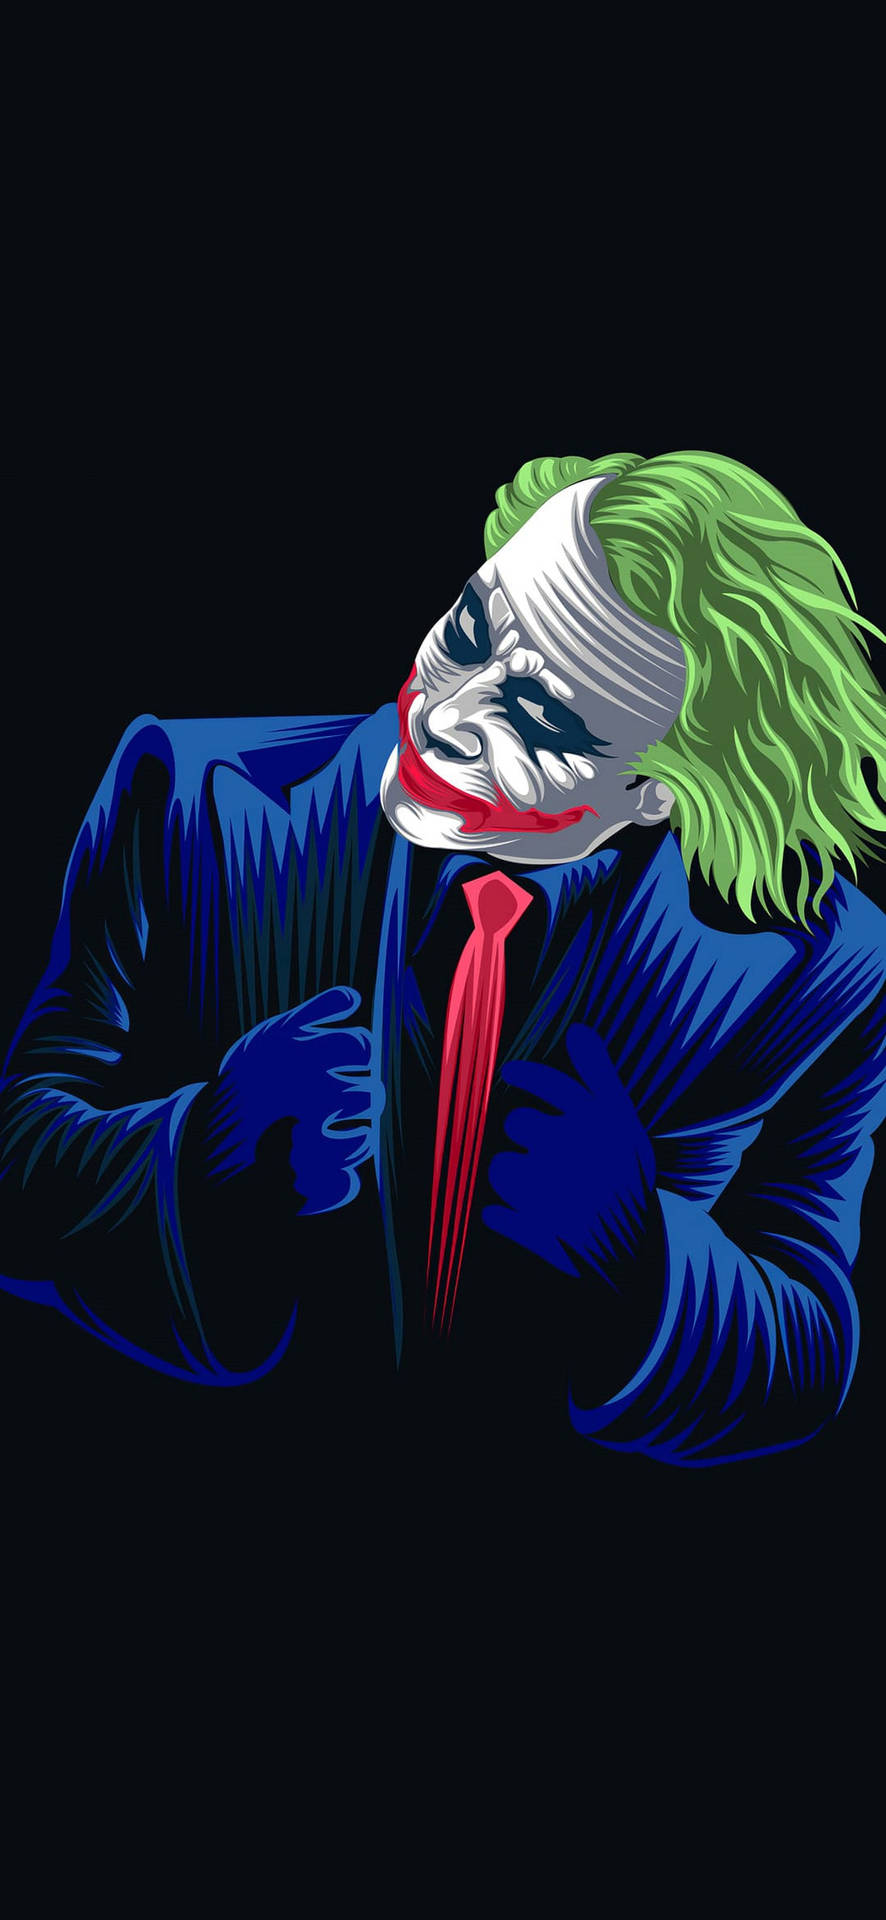 Download Joker Ledger Neon Portrait Wallpaper | Wallpapers.com